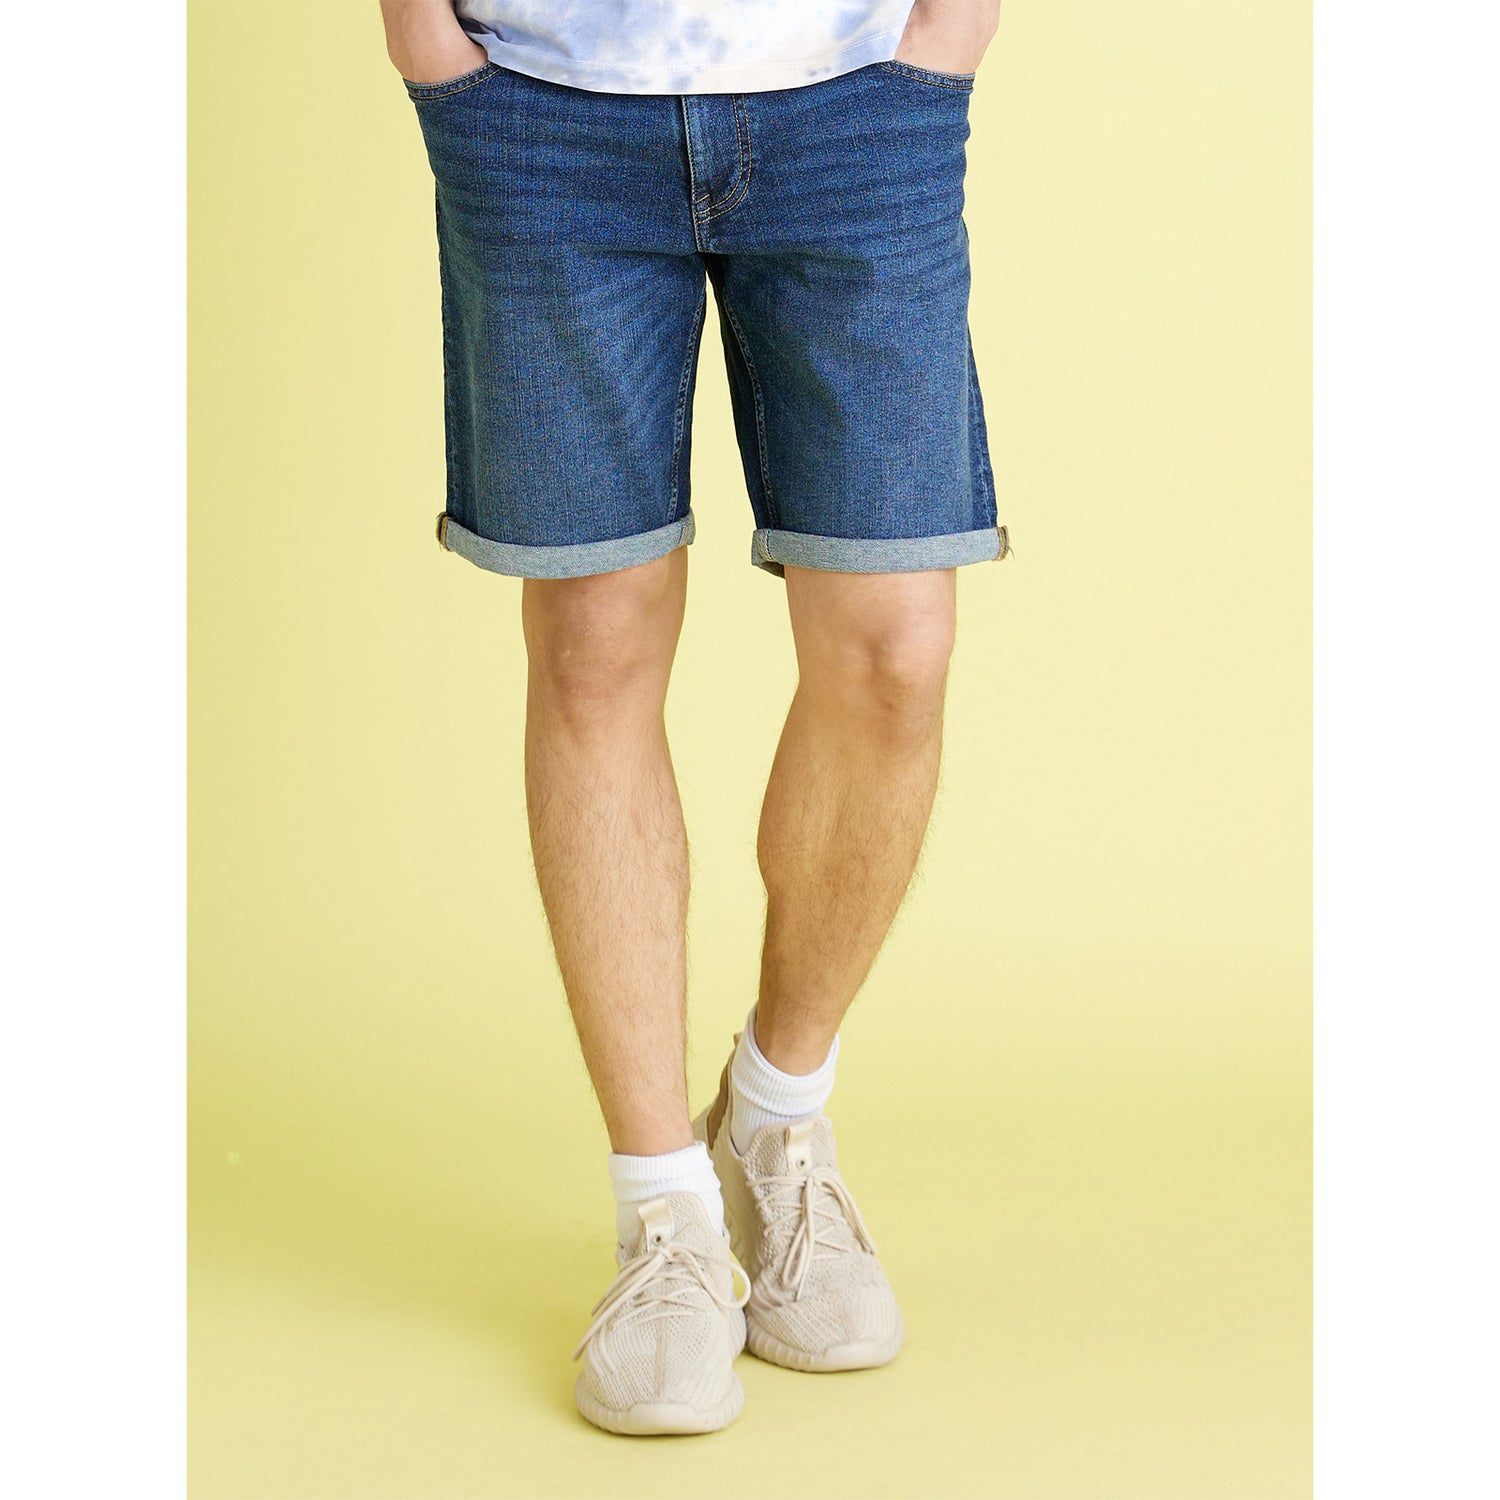 Blue Solid Washed Denim Shorts (DOFIRSTBM)